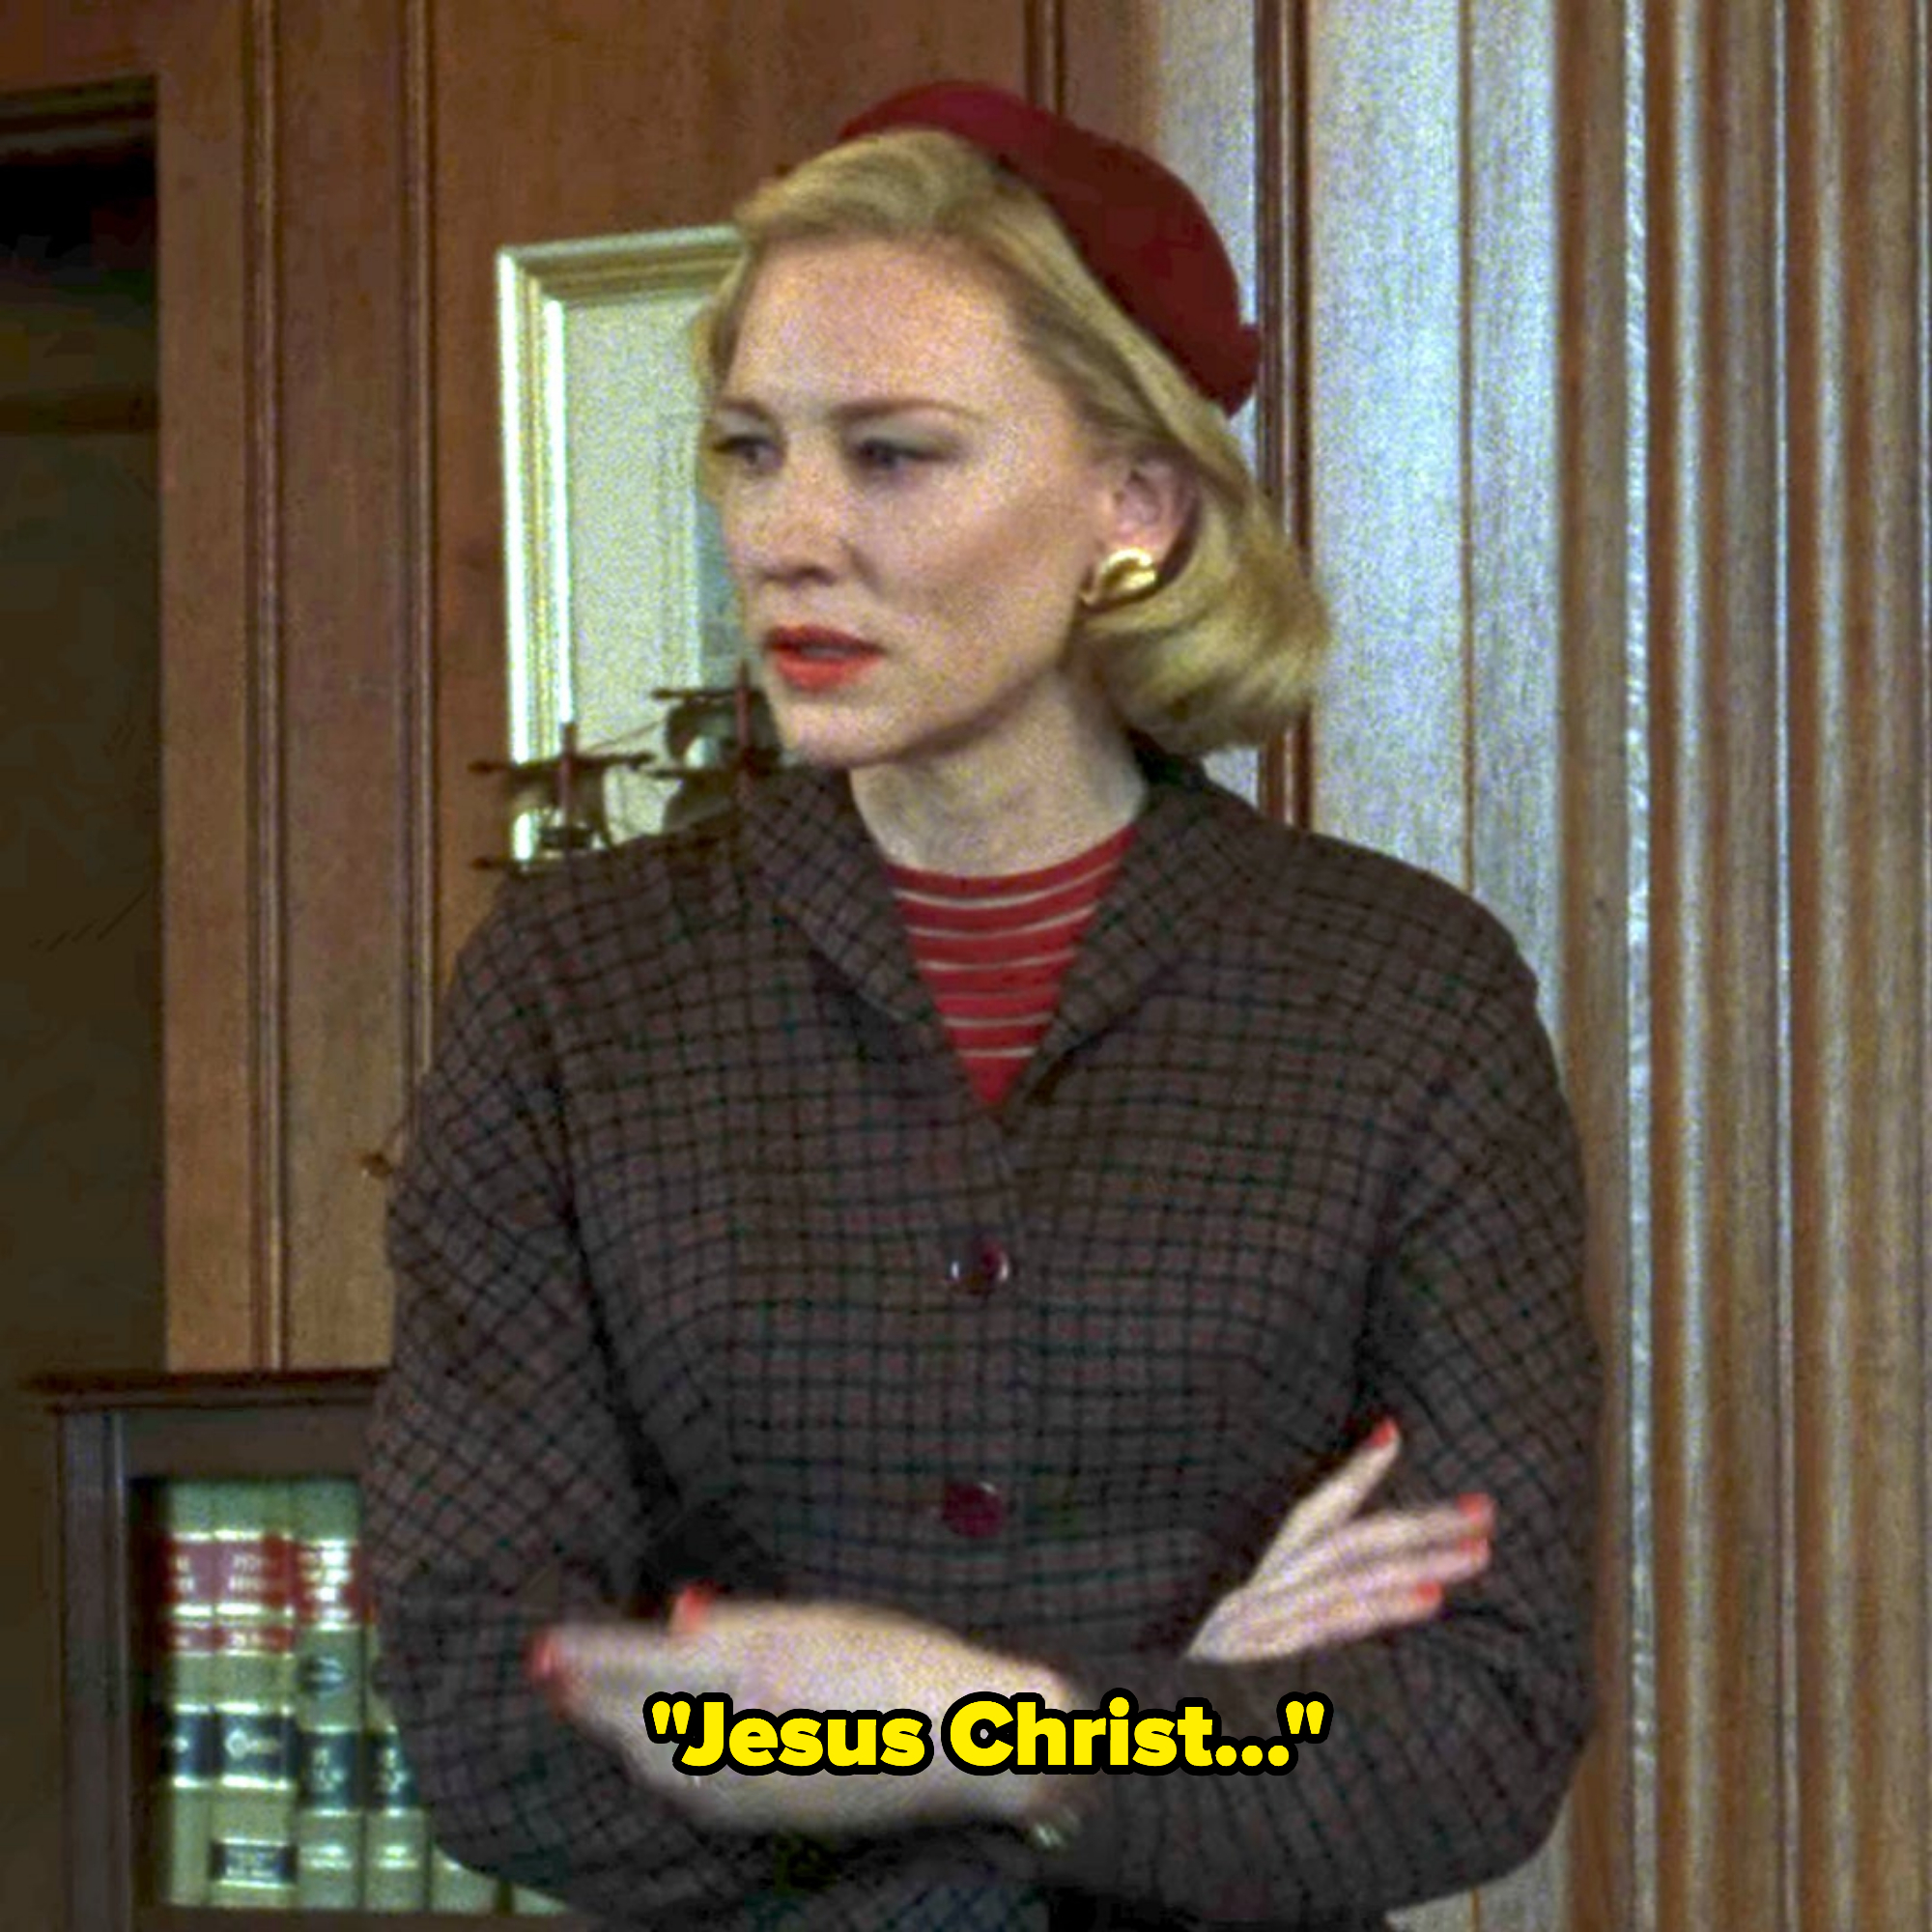 Cate Blanchett in &quot;Carol&quot;